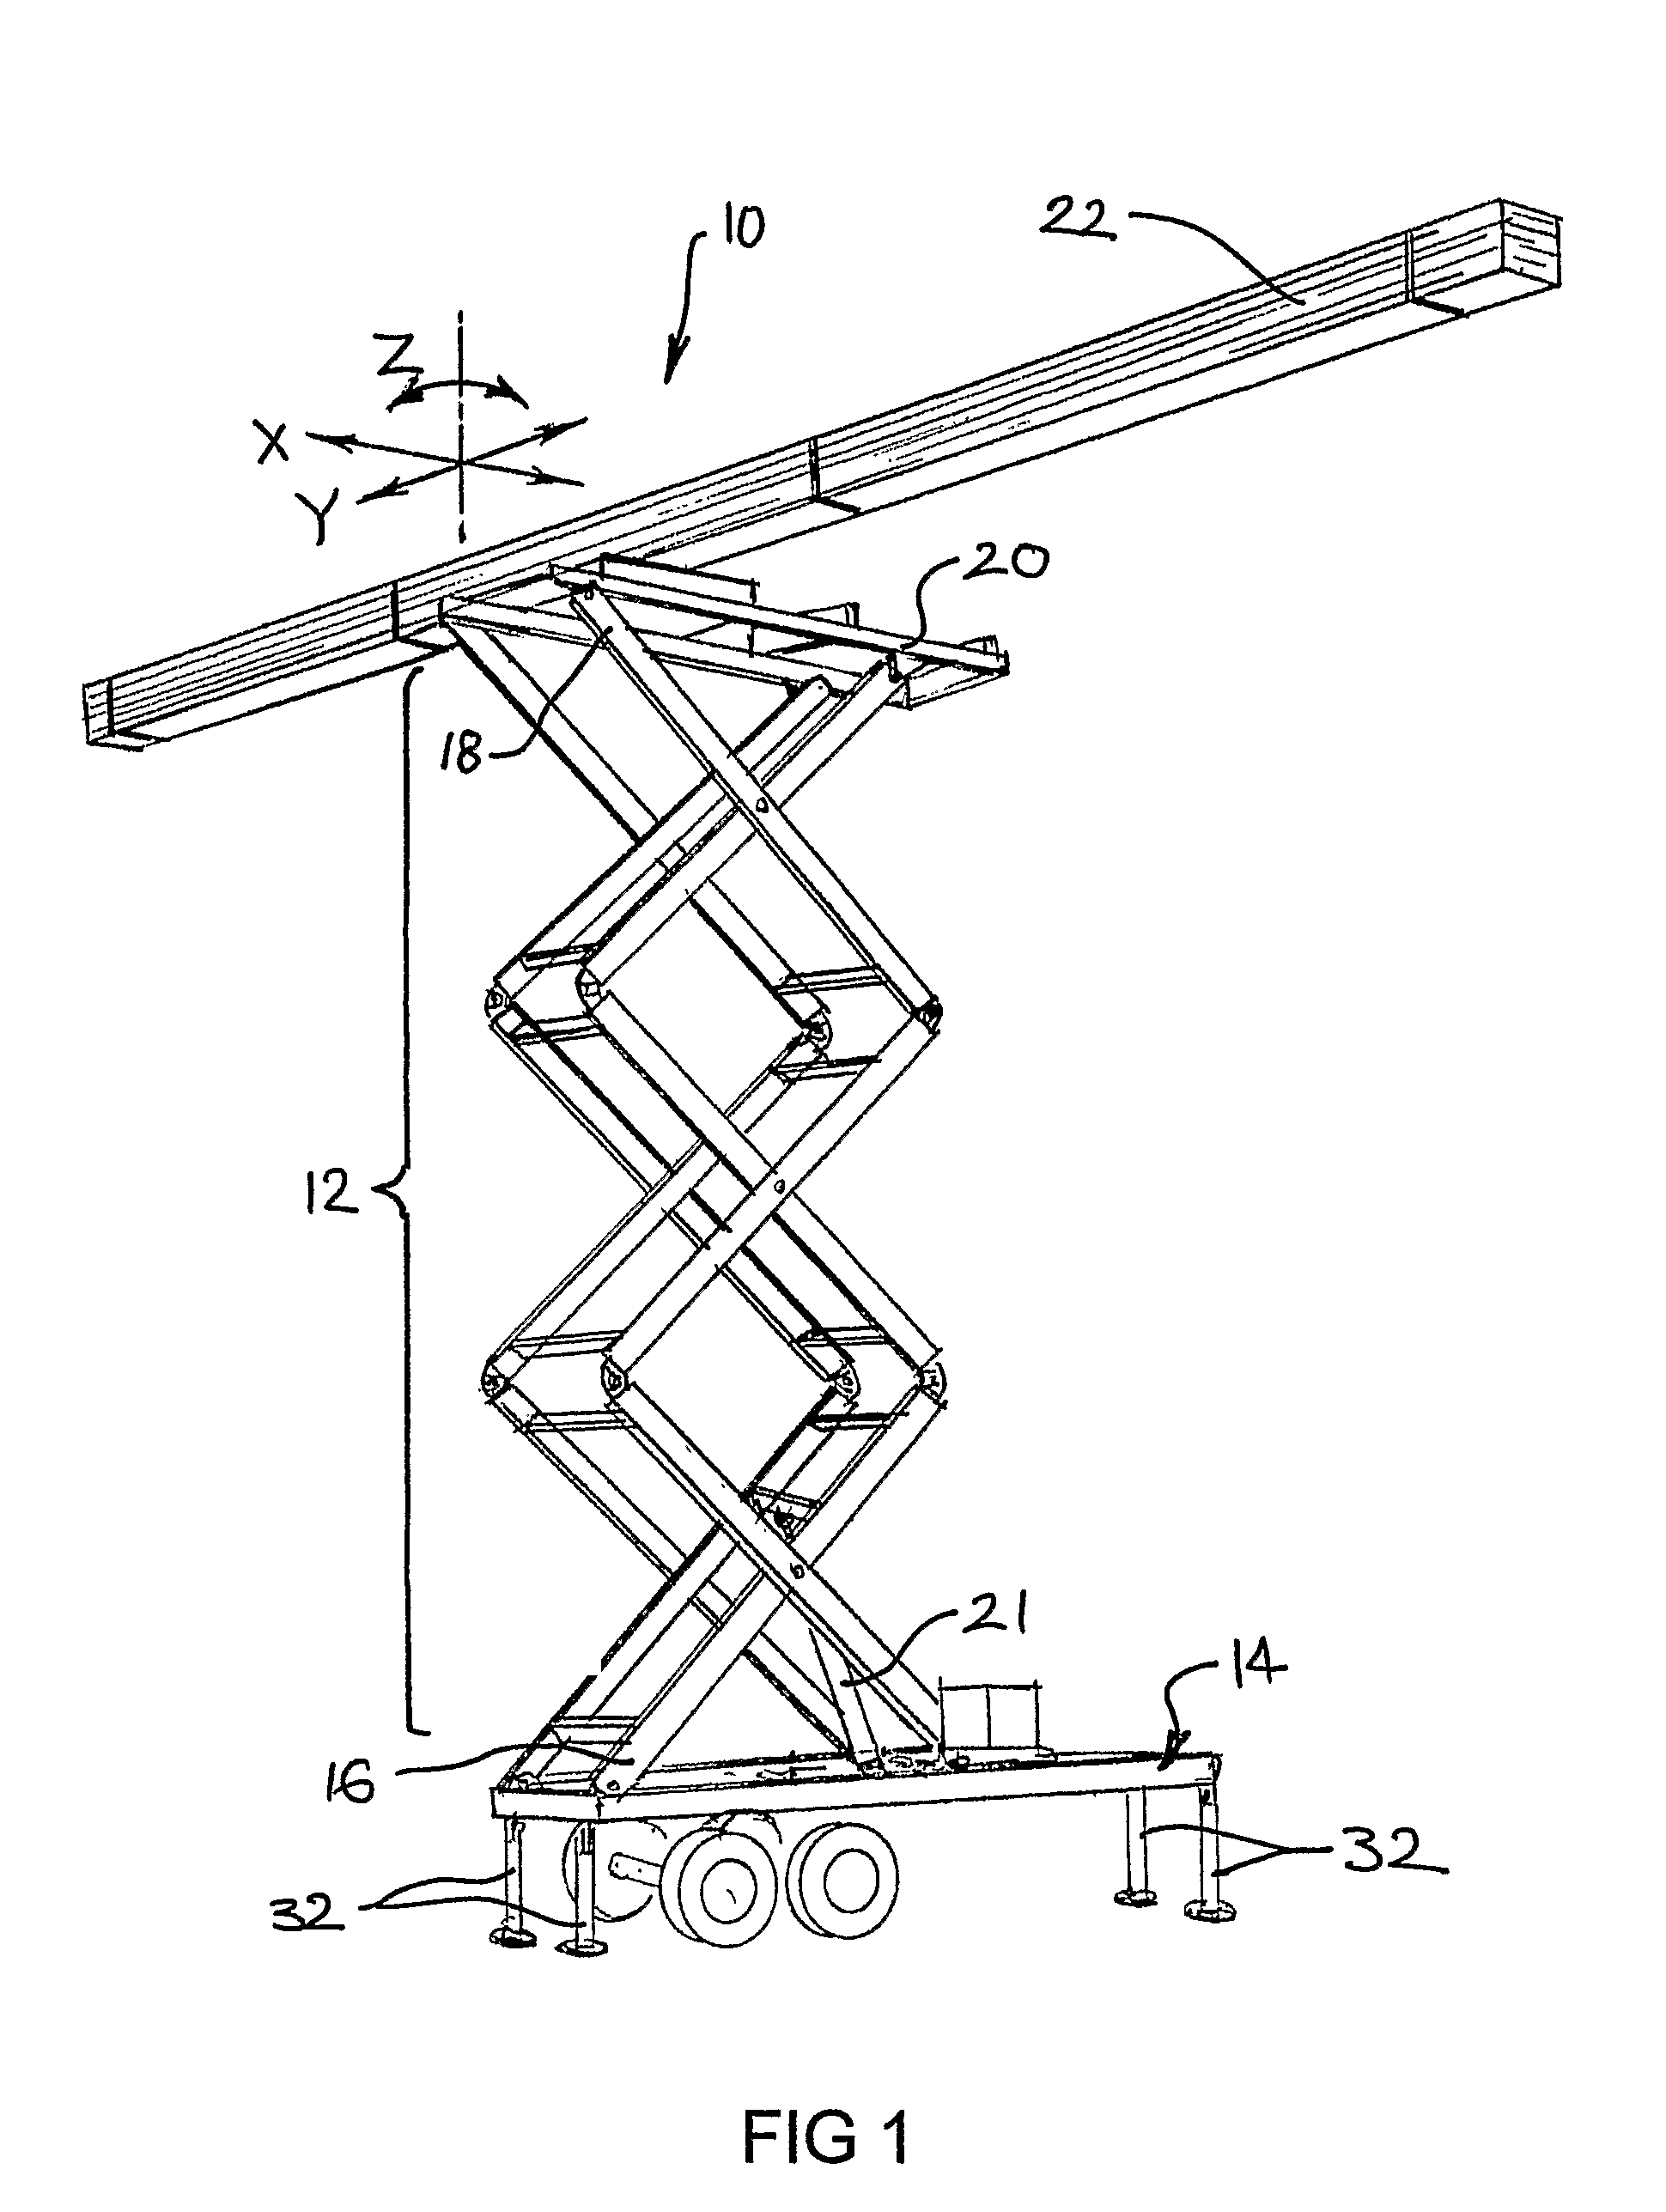 Lifting and positioning apparatus